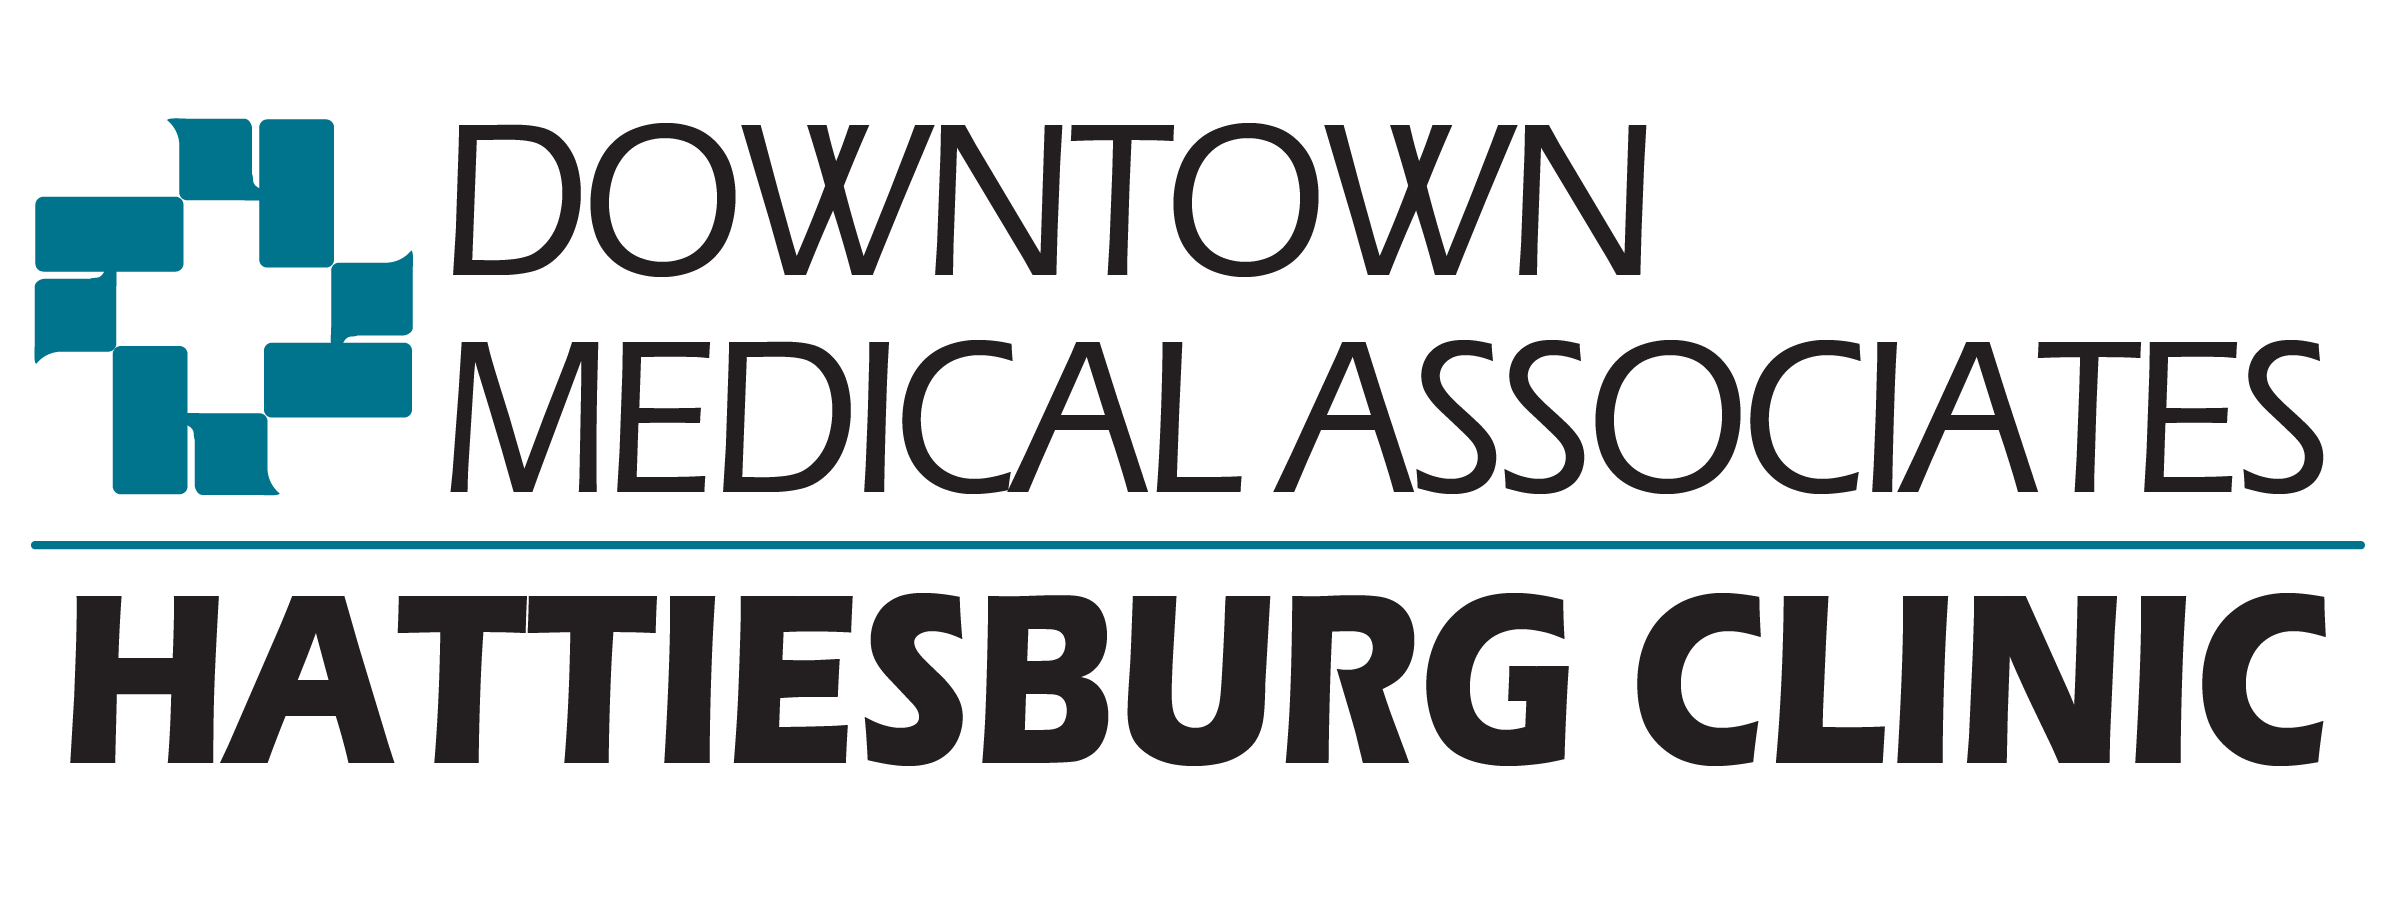 Downtown Medical Associates logo